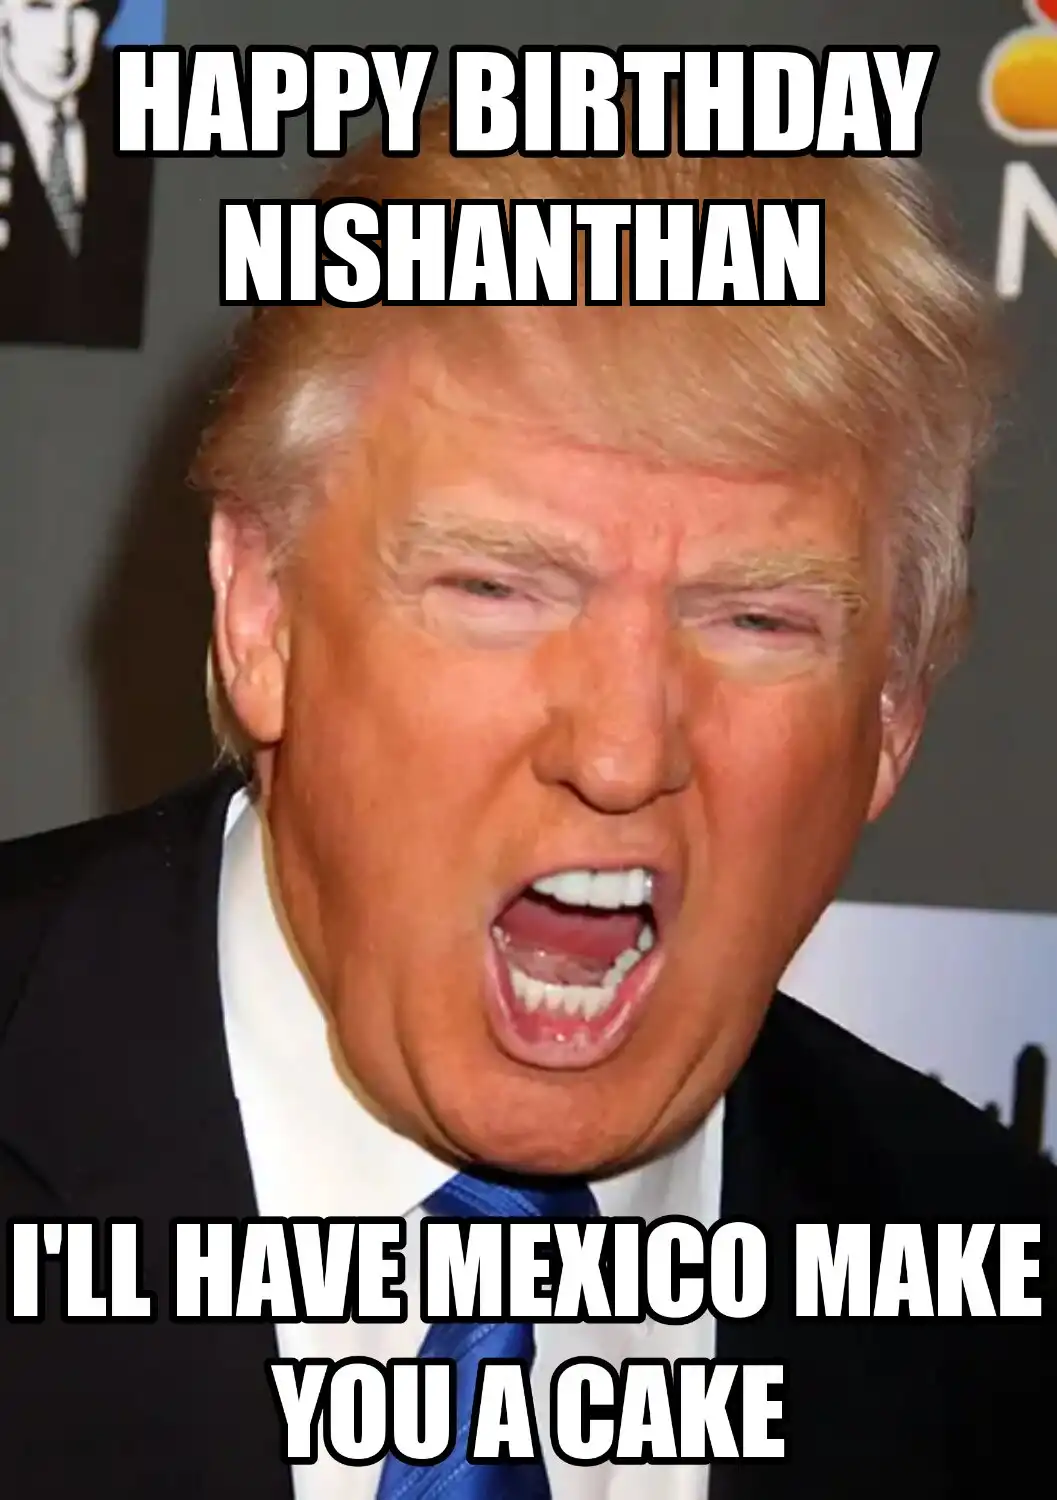 Happy Birthday Nishanthan Mexico Make You A Cake Meme